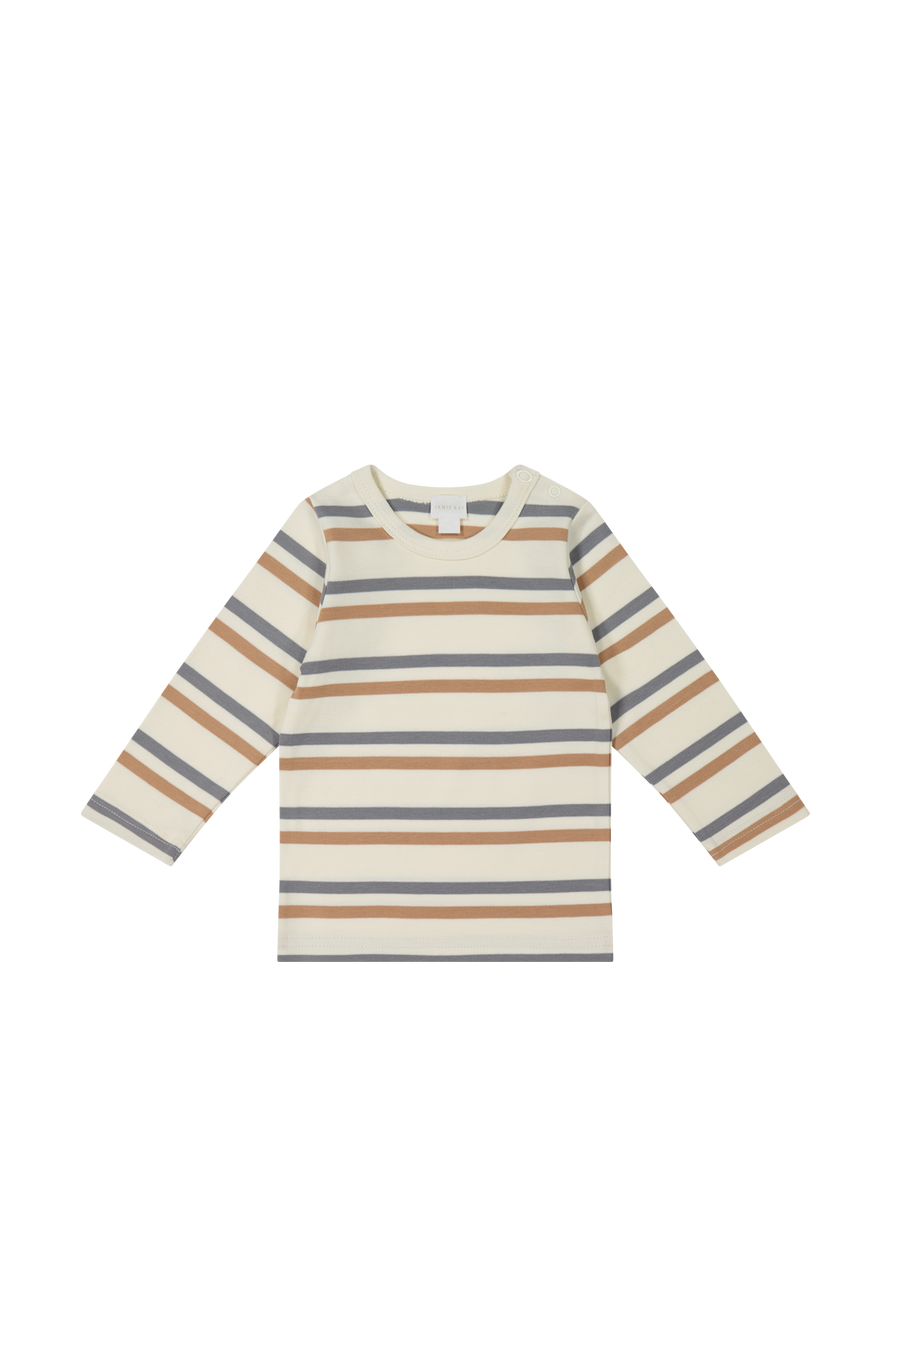 Pima Cotton Vinny Long Sleeve Top - Hudson Stripe Childrens Top from Jamie Kay USA